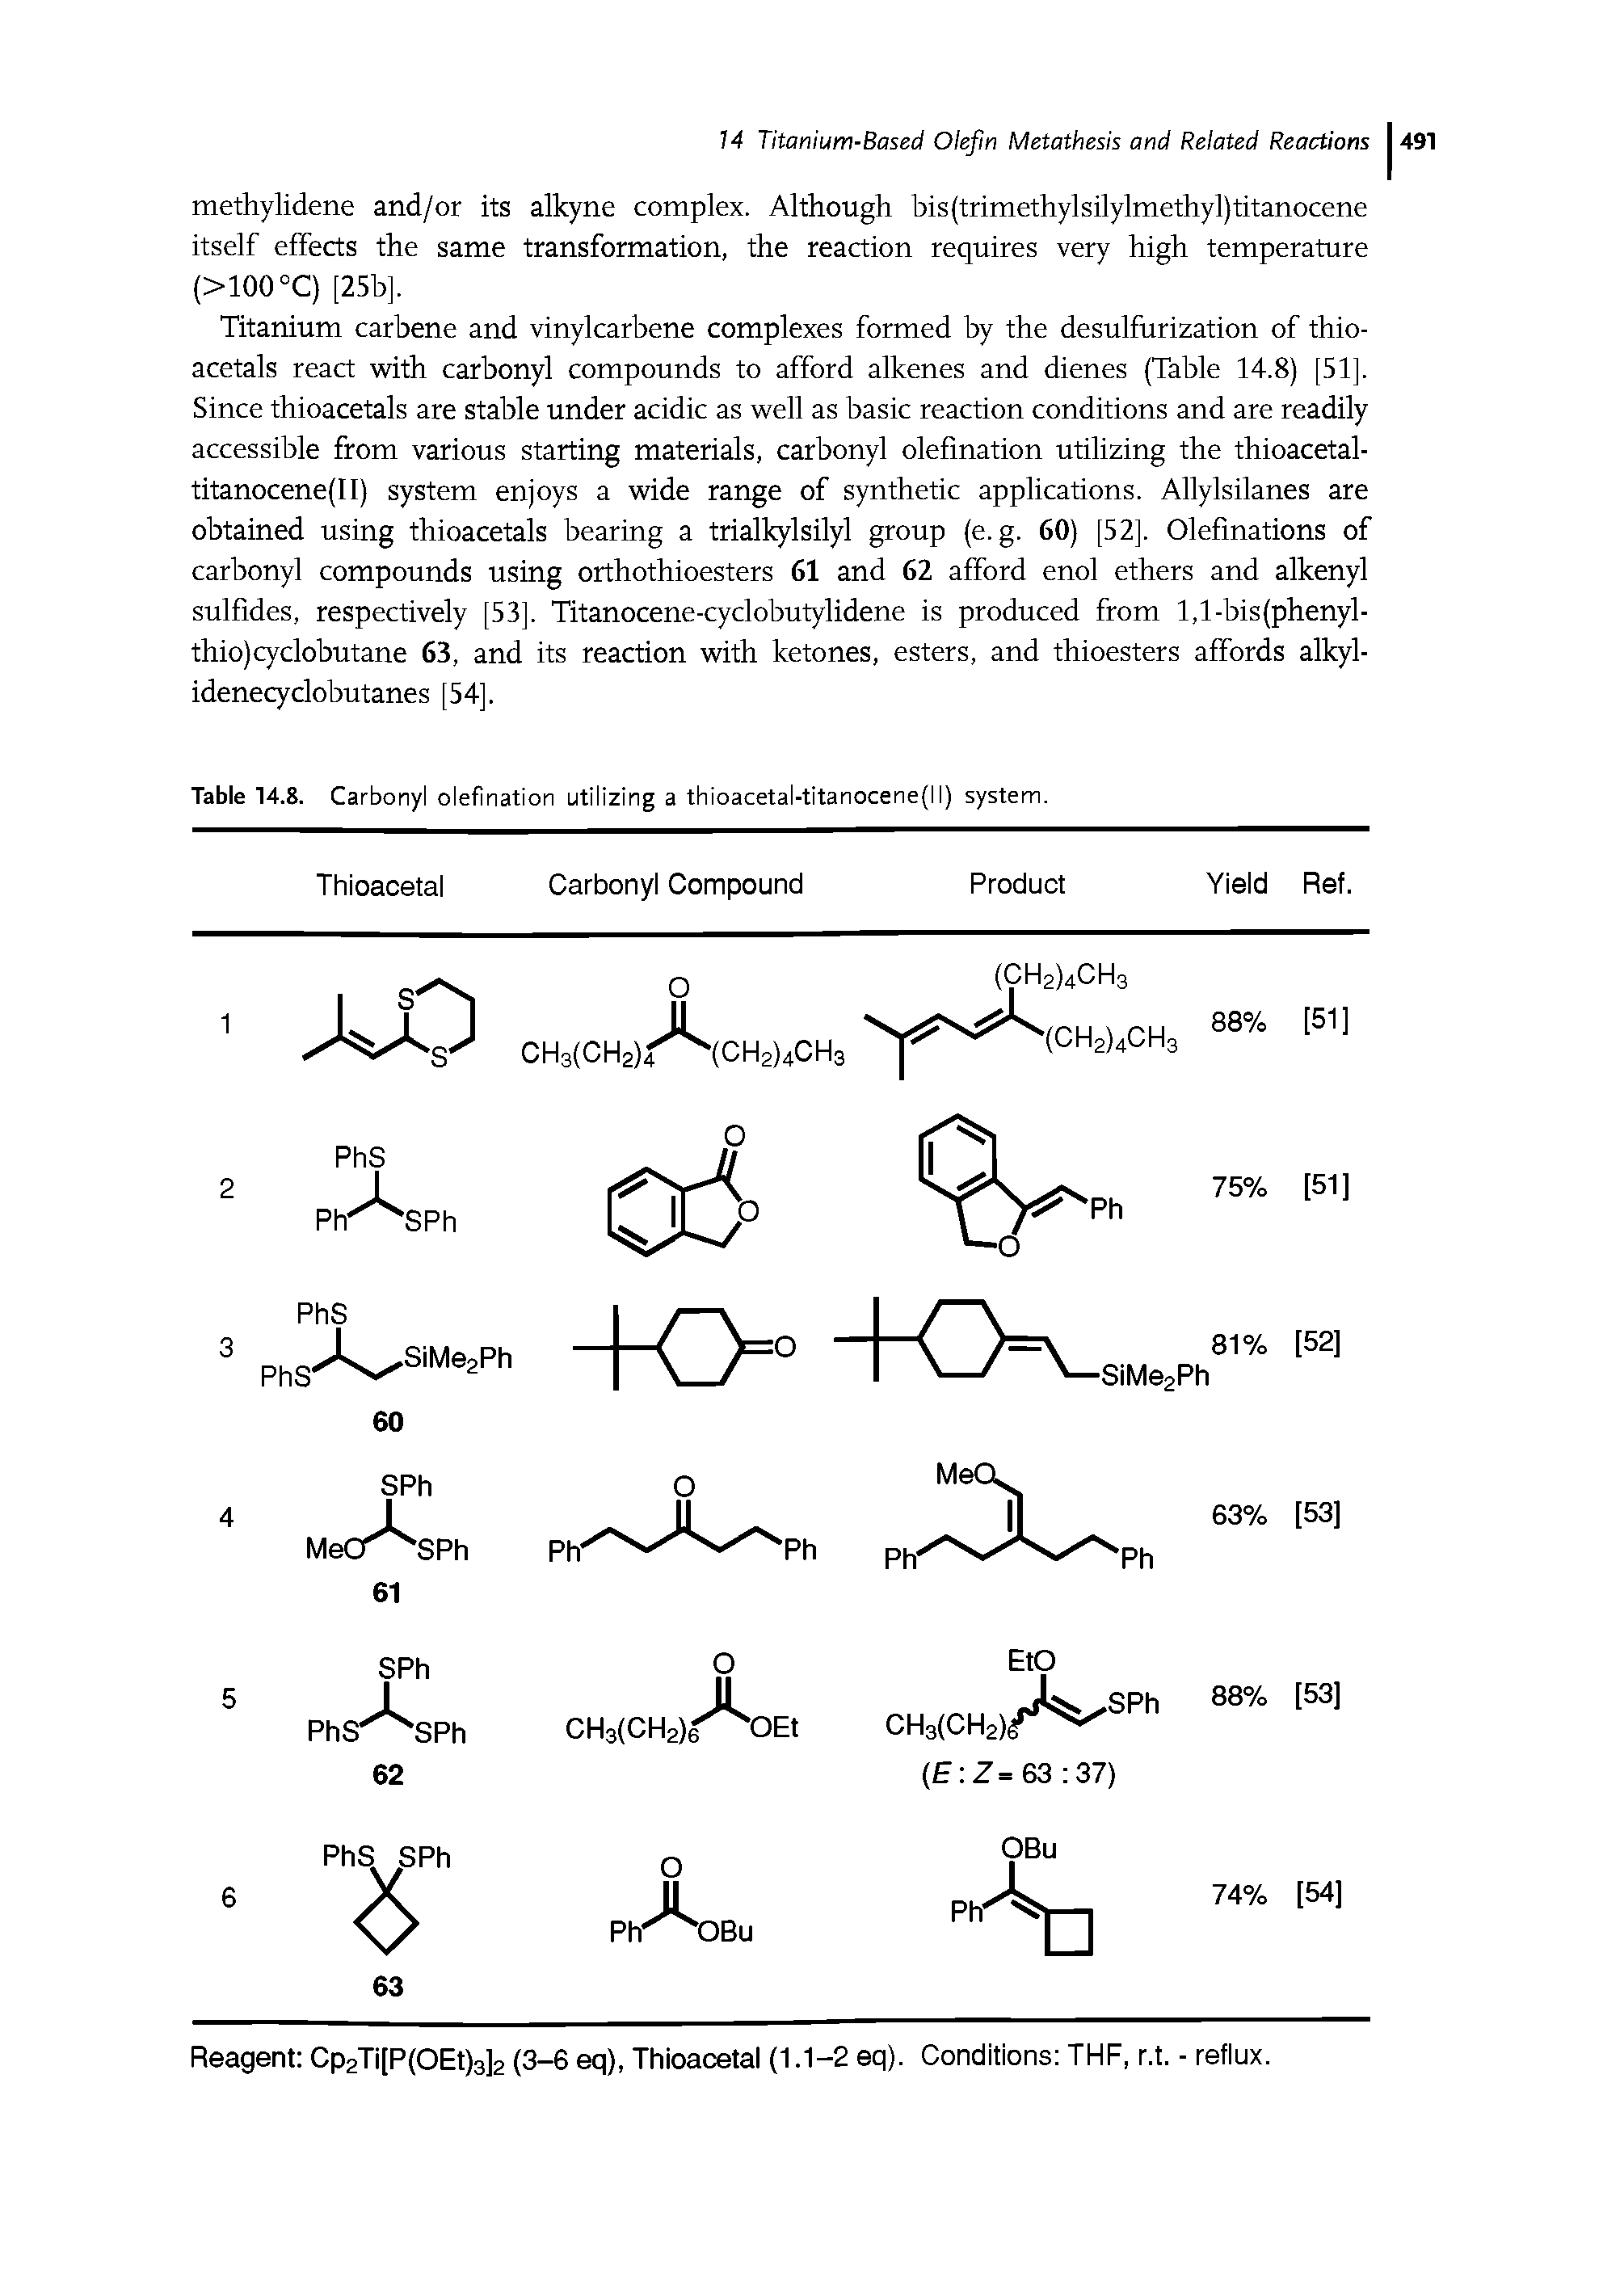 Table 14.8. Carbonyl olefination utilizing a thioacetal-titanocene(l I) system.